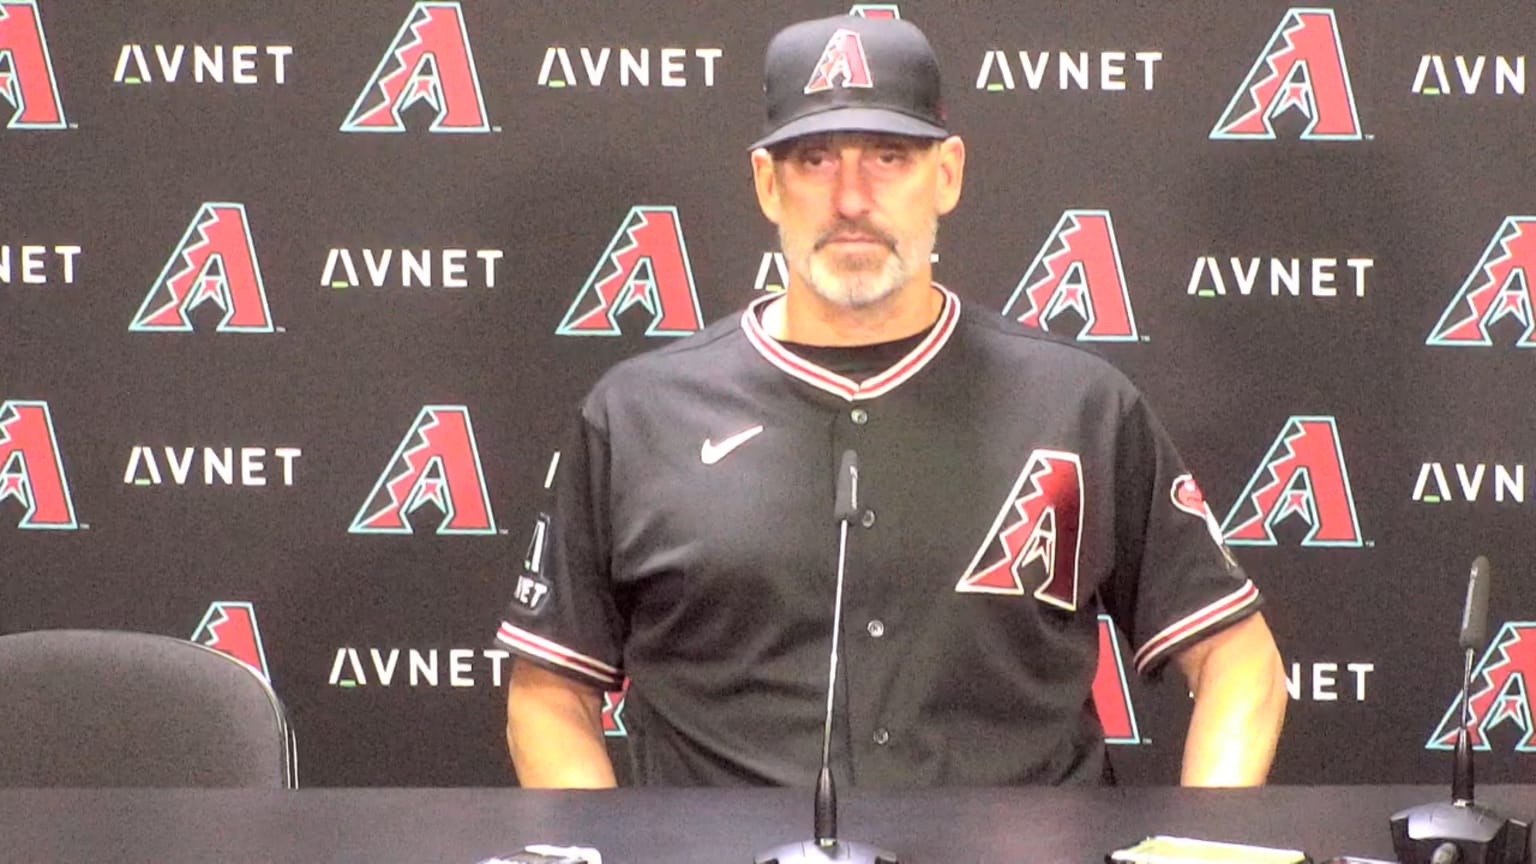 Arizona Diamondbacks, Avnet partner for jersey patch during 2023 MLB season